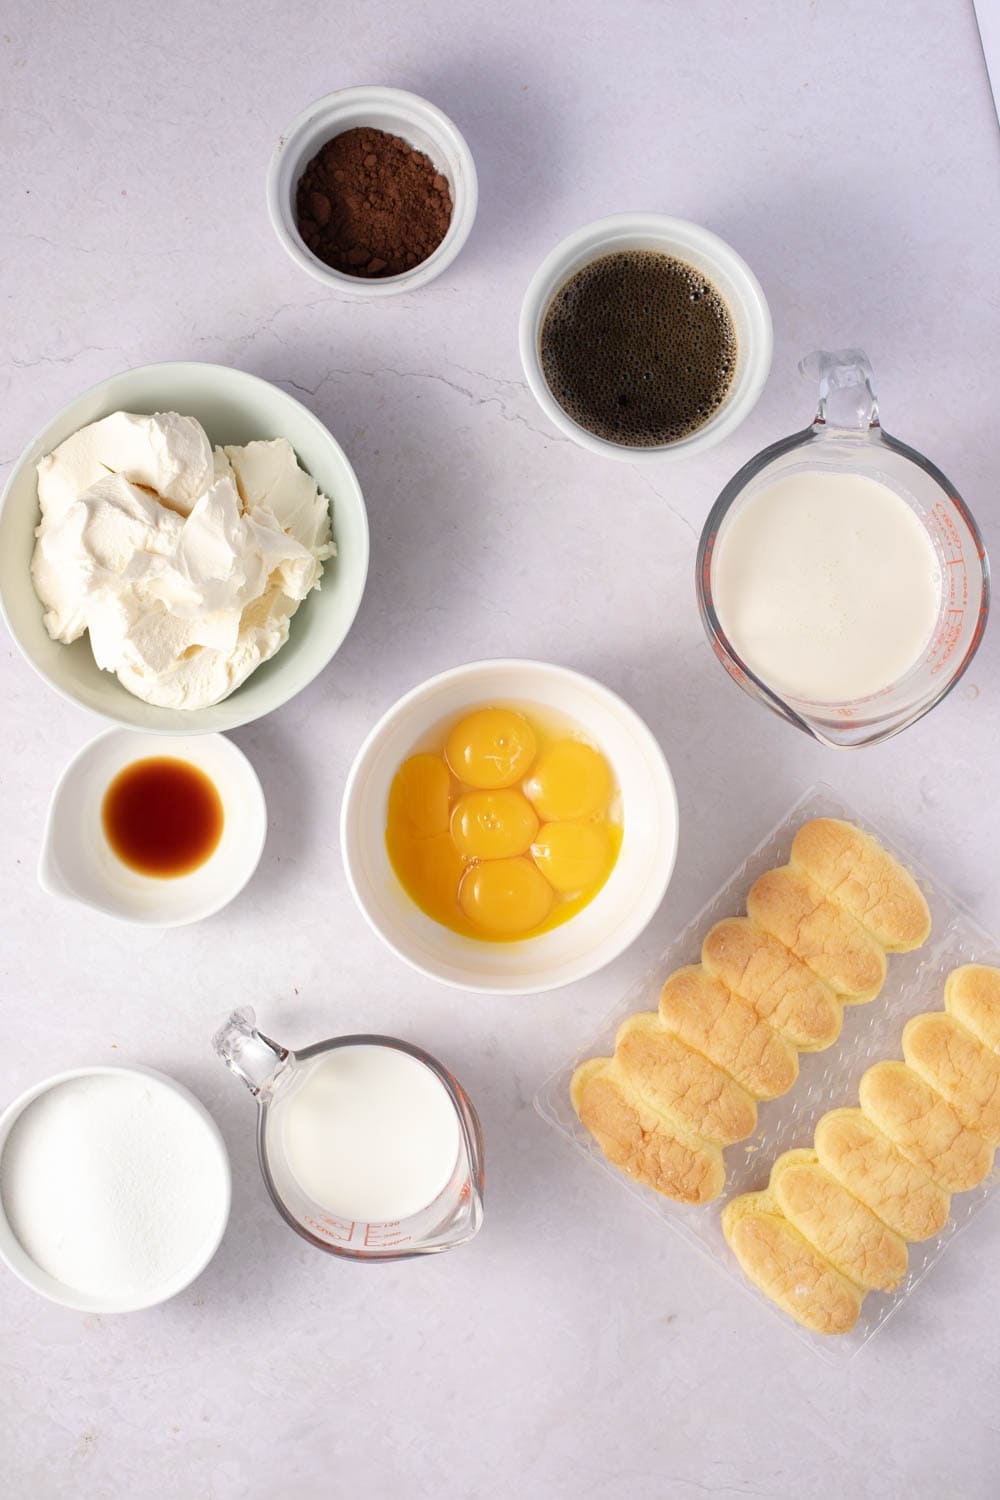 Tiramisu Ingredients - Mascaporne, Egg Yolks, Sugar, Milk, Whipped Cream, Vanilla, Ladyfingers, Coffee, Rum and Cocoa Powder